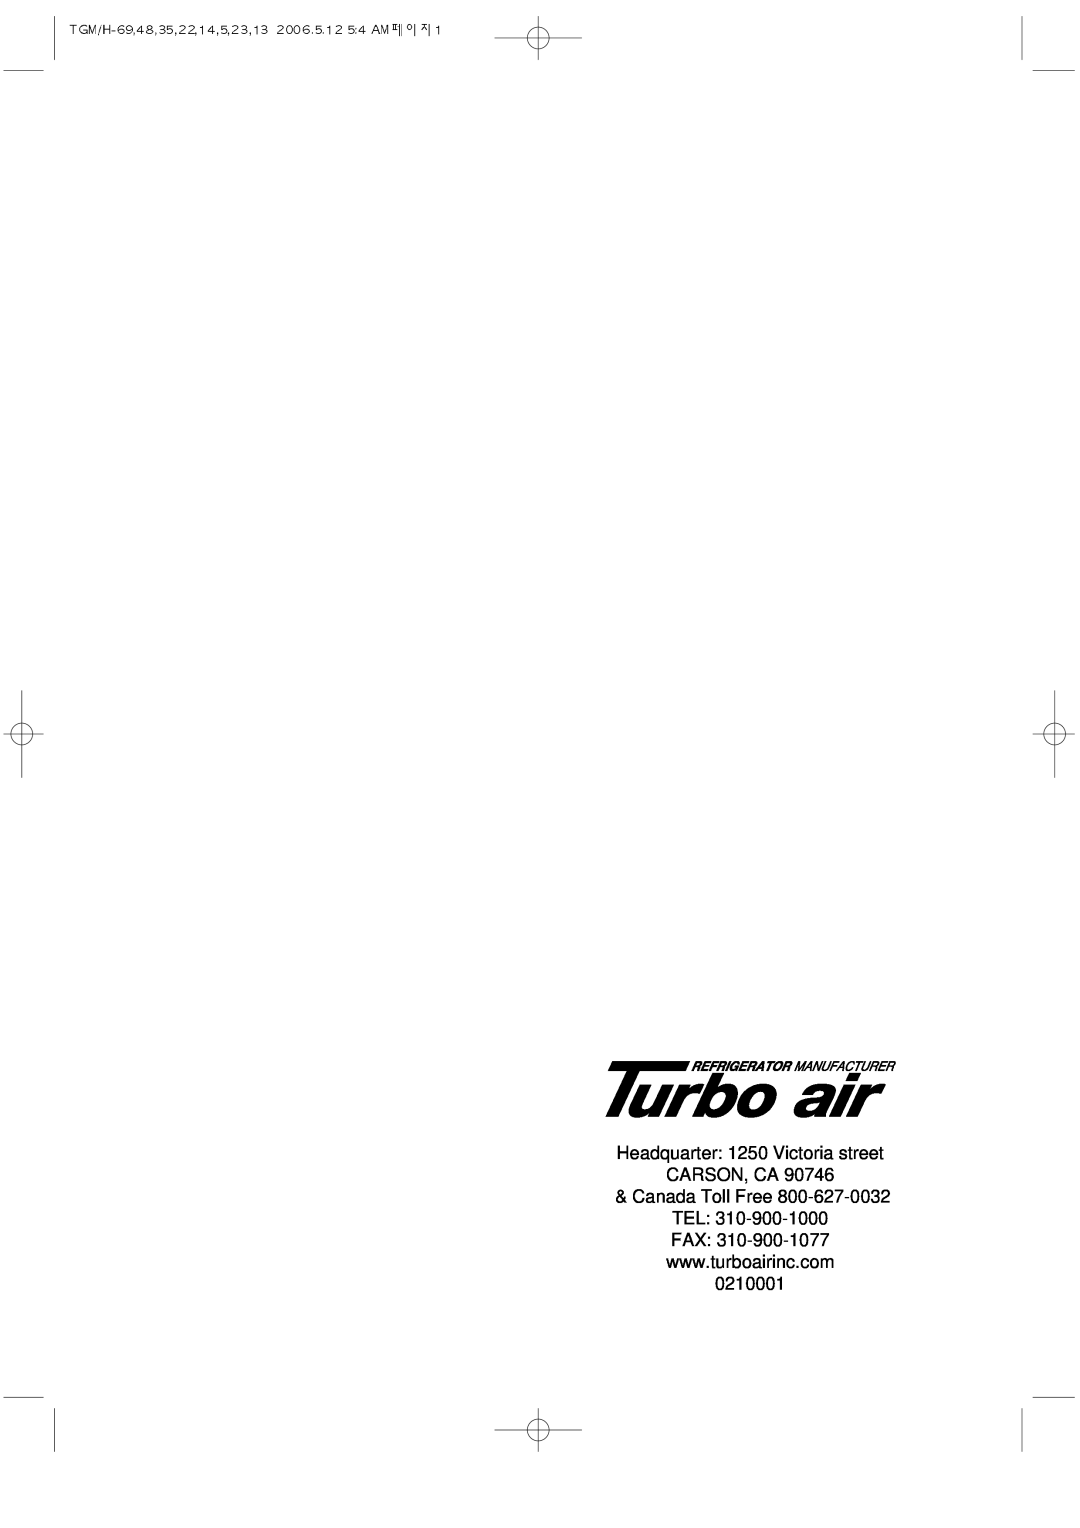 Turbo Air TGM-5R manual Headquarter 1250 Victoria street CARSON, CA, Canada Toll Free 800-627-0032 TEL FAX, 0210001 